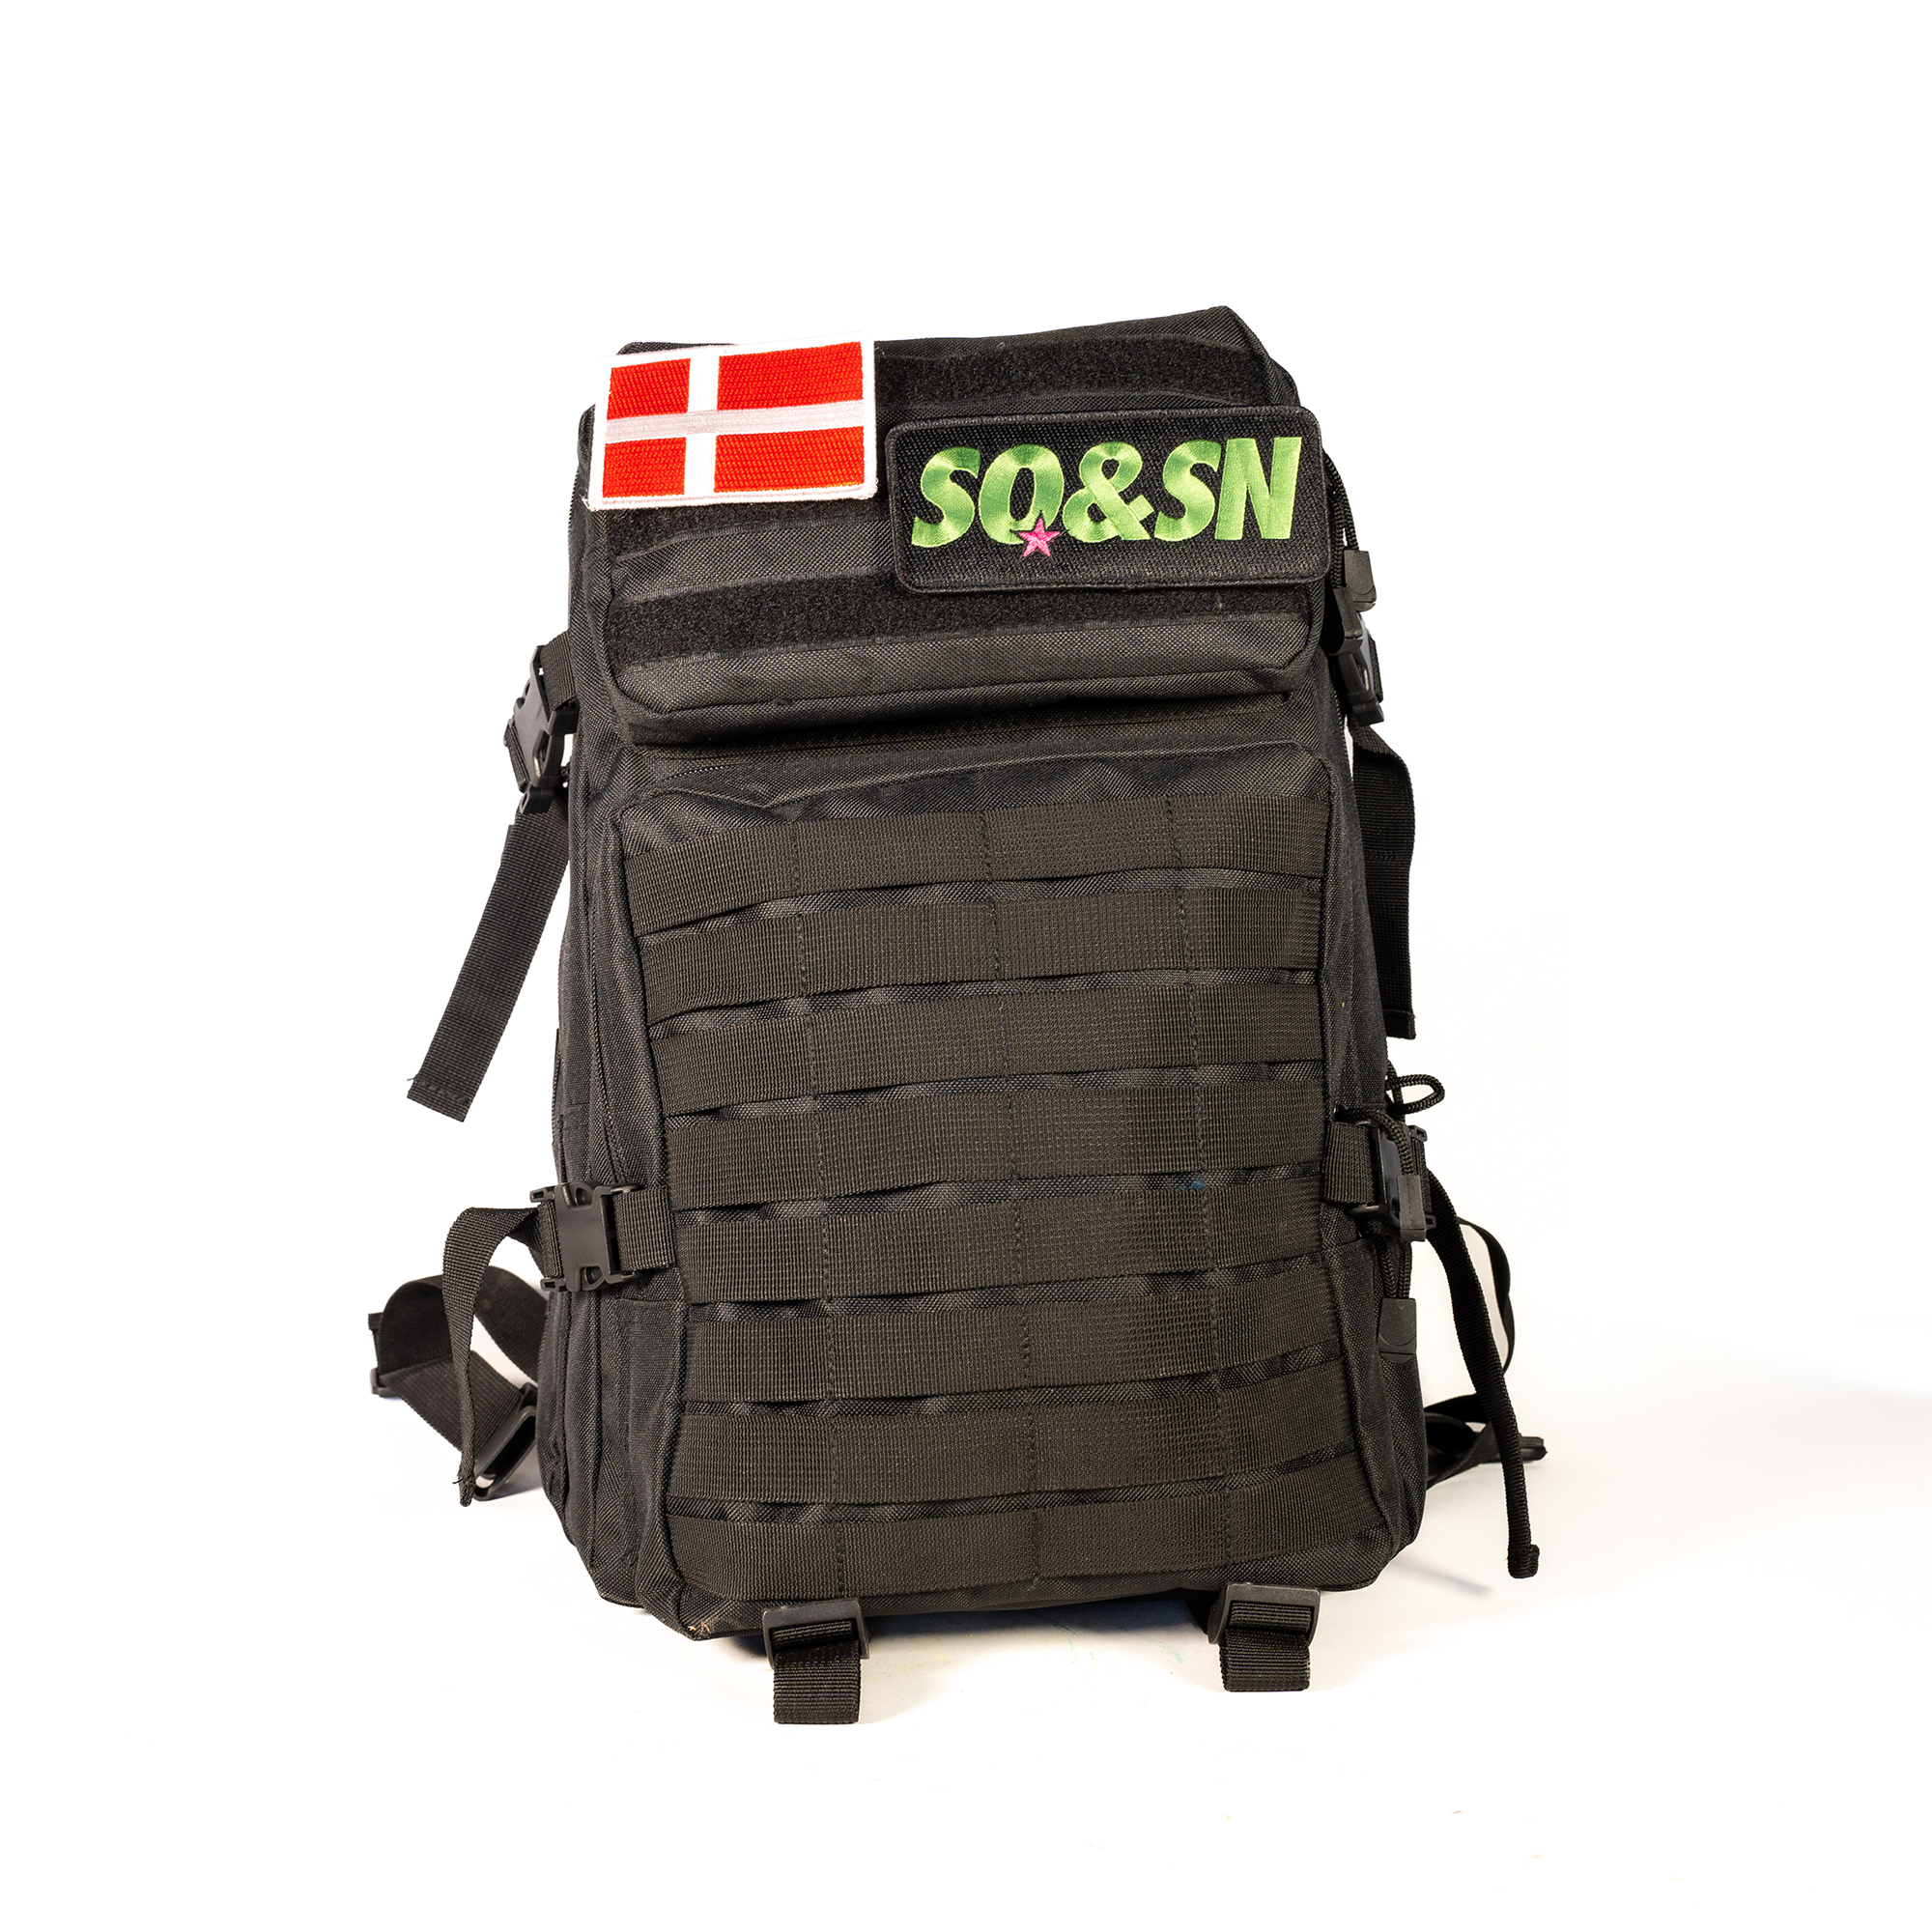 SQ&SN Urban Backpack Rygsæk - Danmark thumbnail